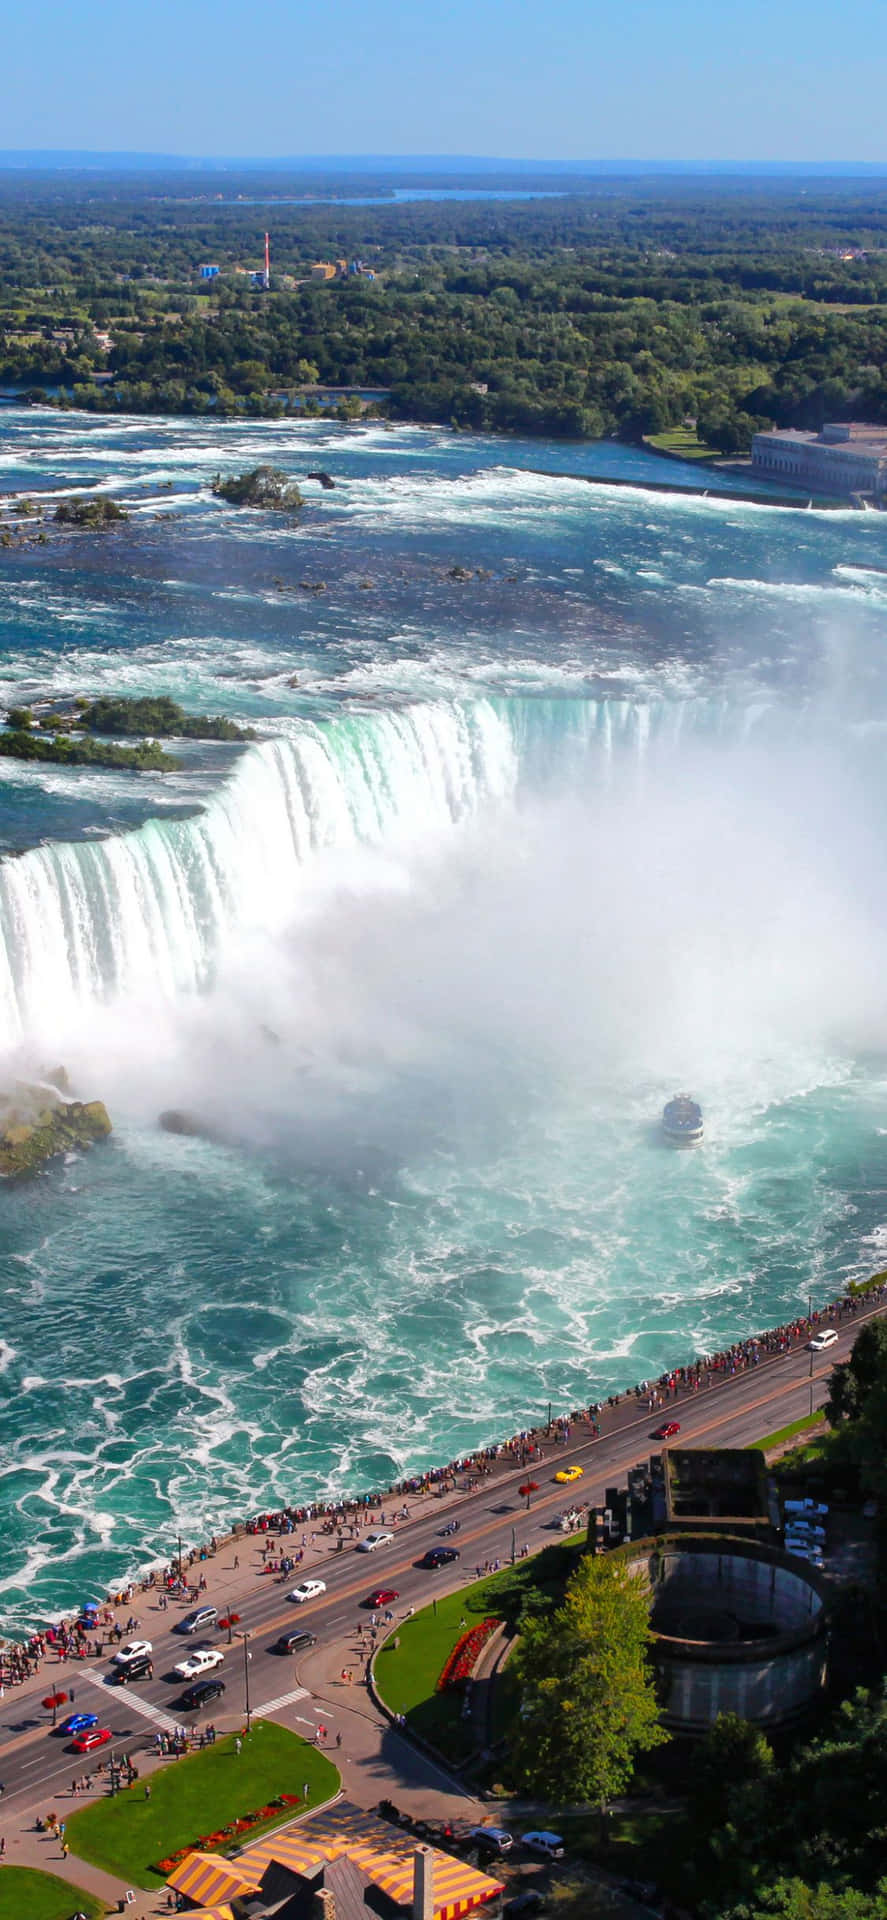 iPhone X Niagara Falls Aerial View Background